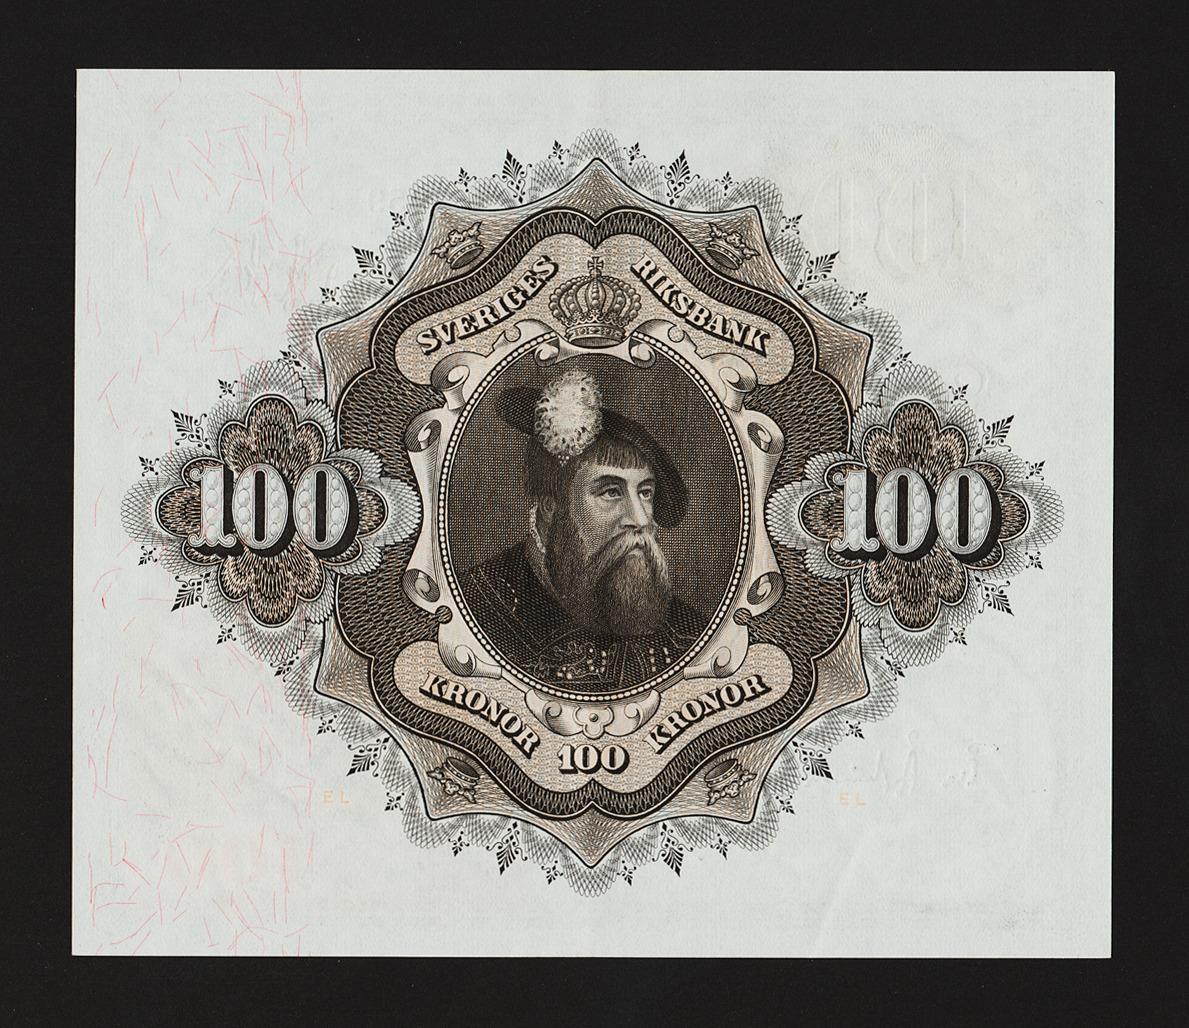 ŠVÉDSKO - SWEDEN - 100 korun, 1959 - stav aUNC - Bankovky